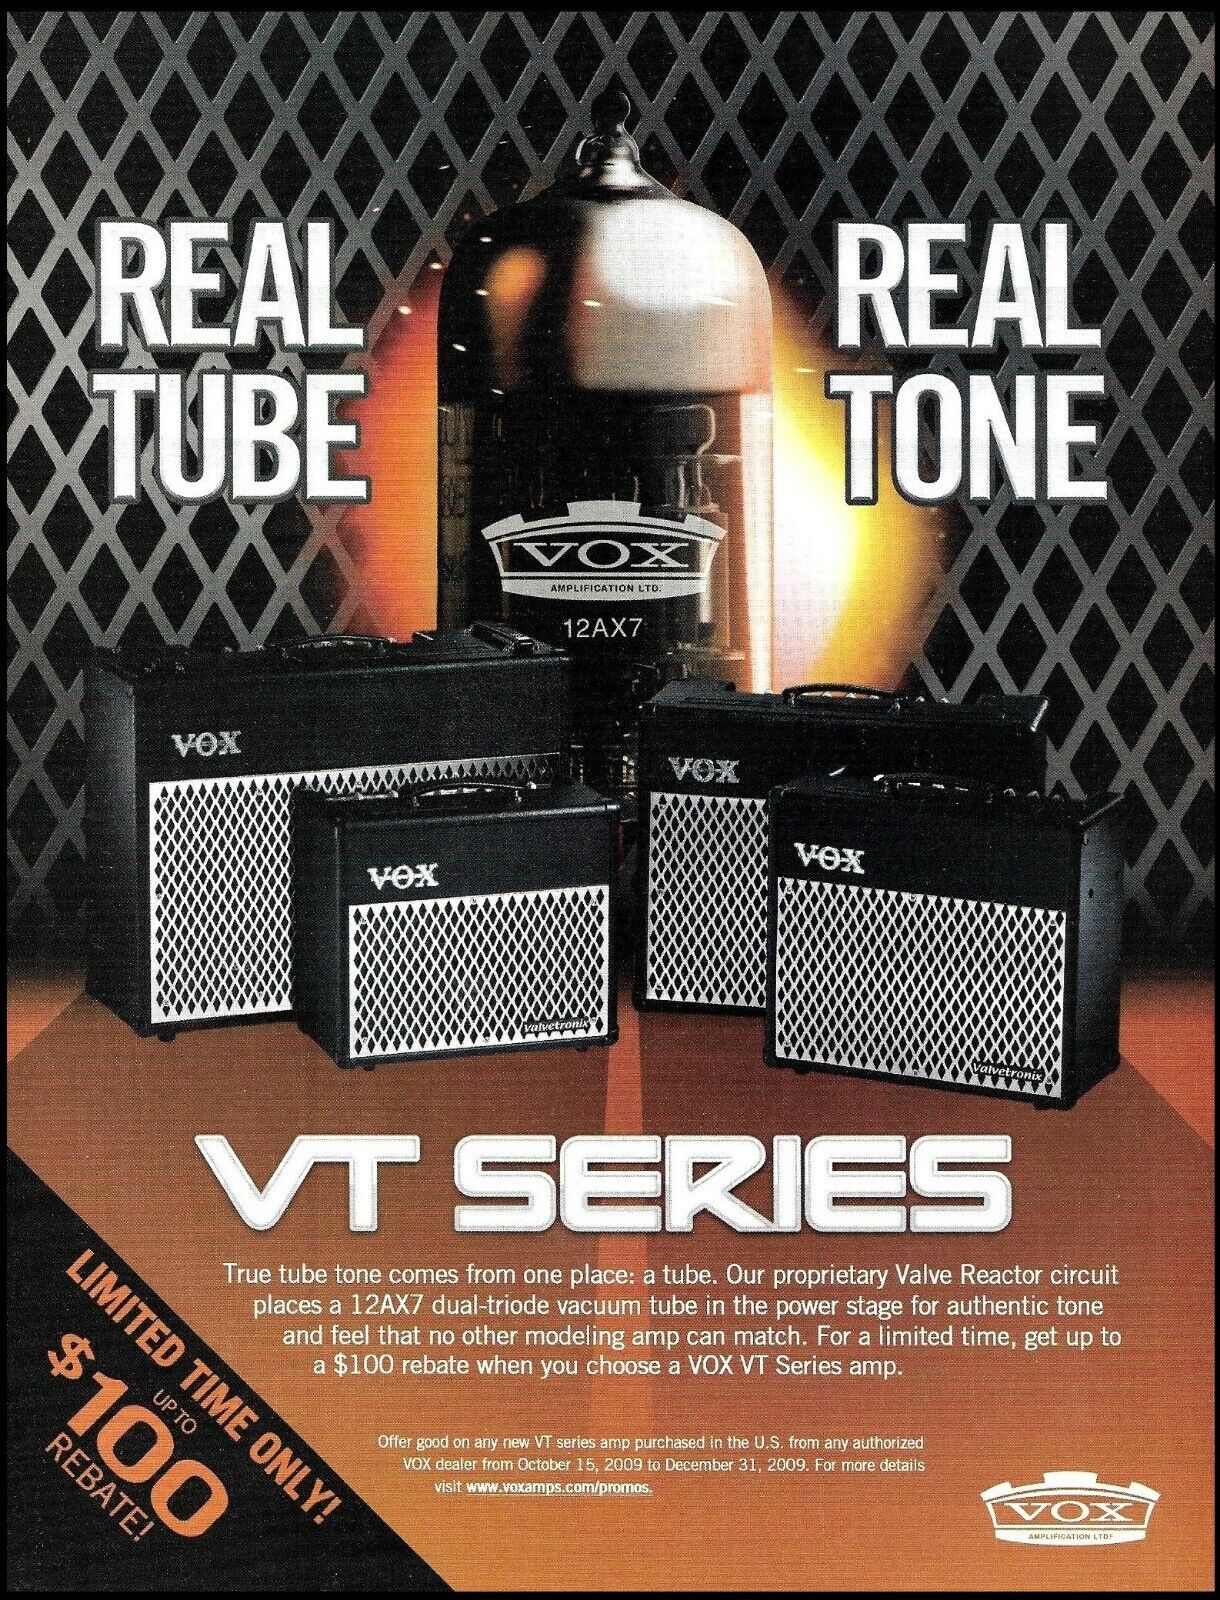 Vox VT Series Amplifier 2009 advertisement 8 x 11 guitar amp ad print